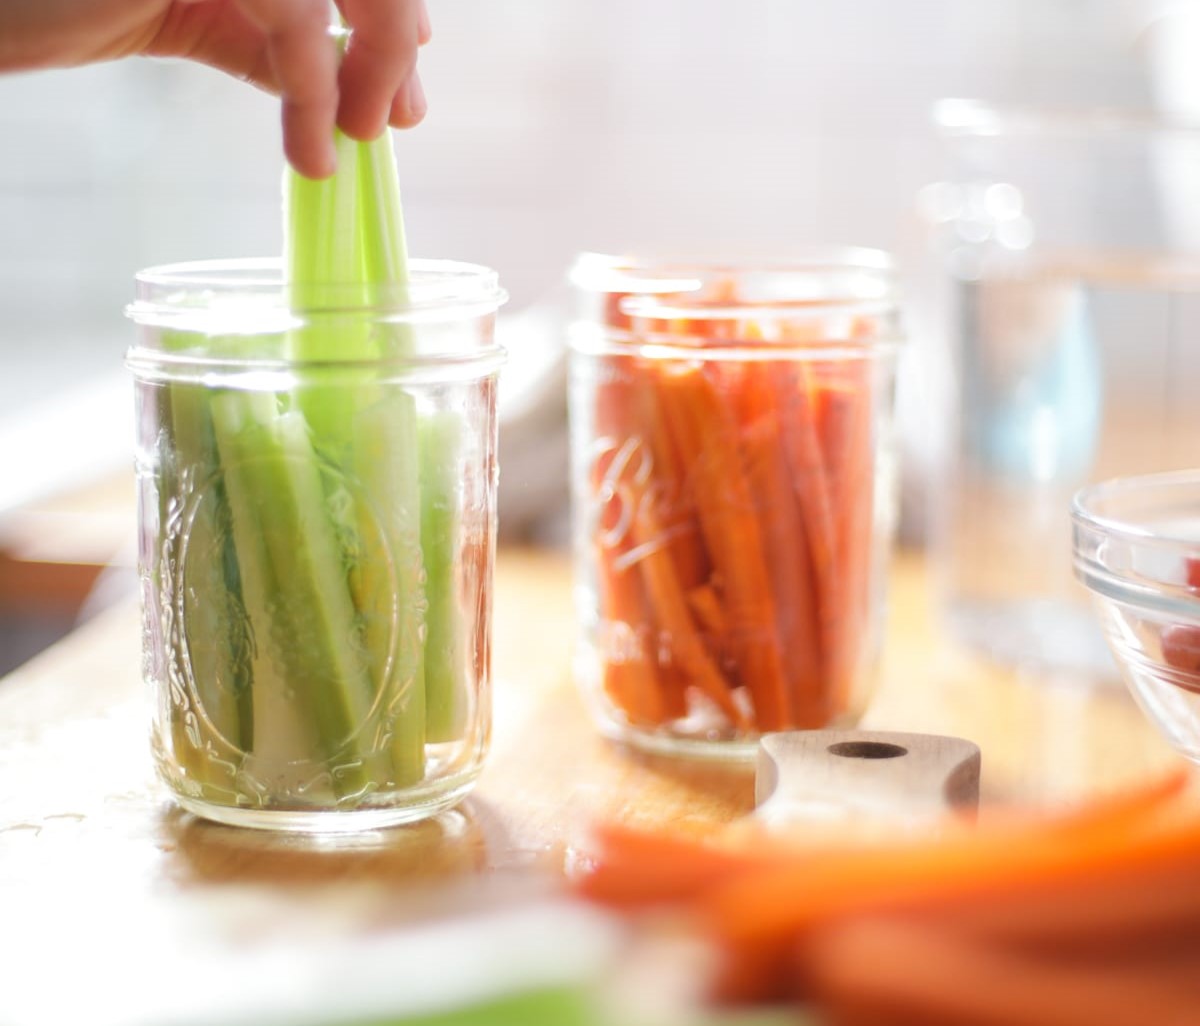 Storing Celery Properly To Extend Its Shelf Life